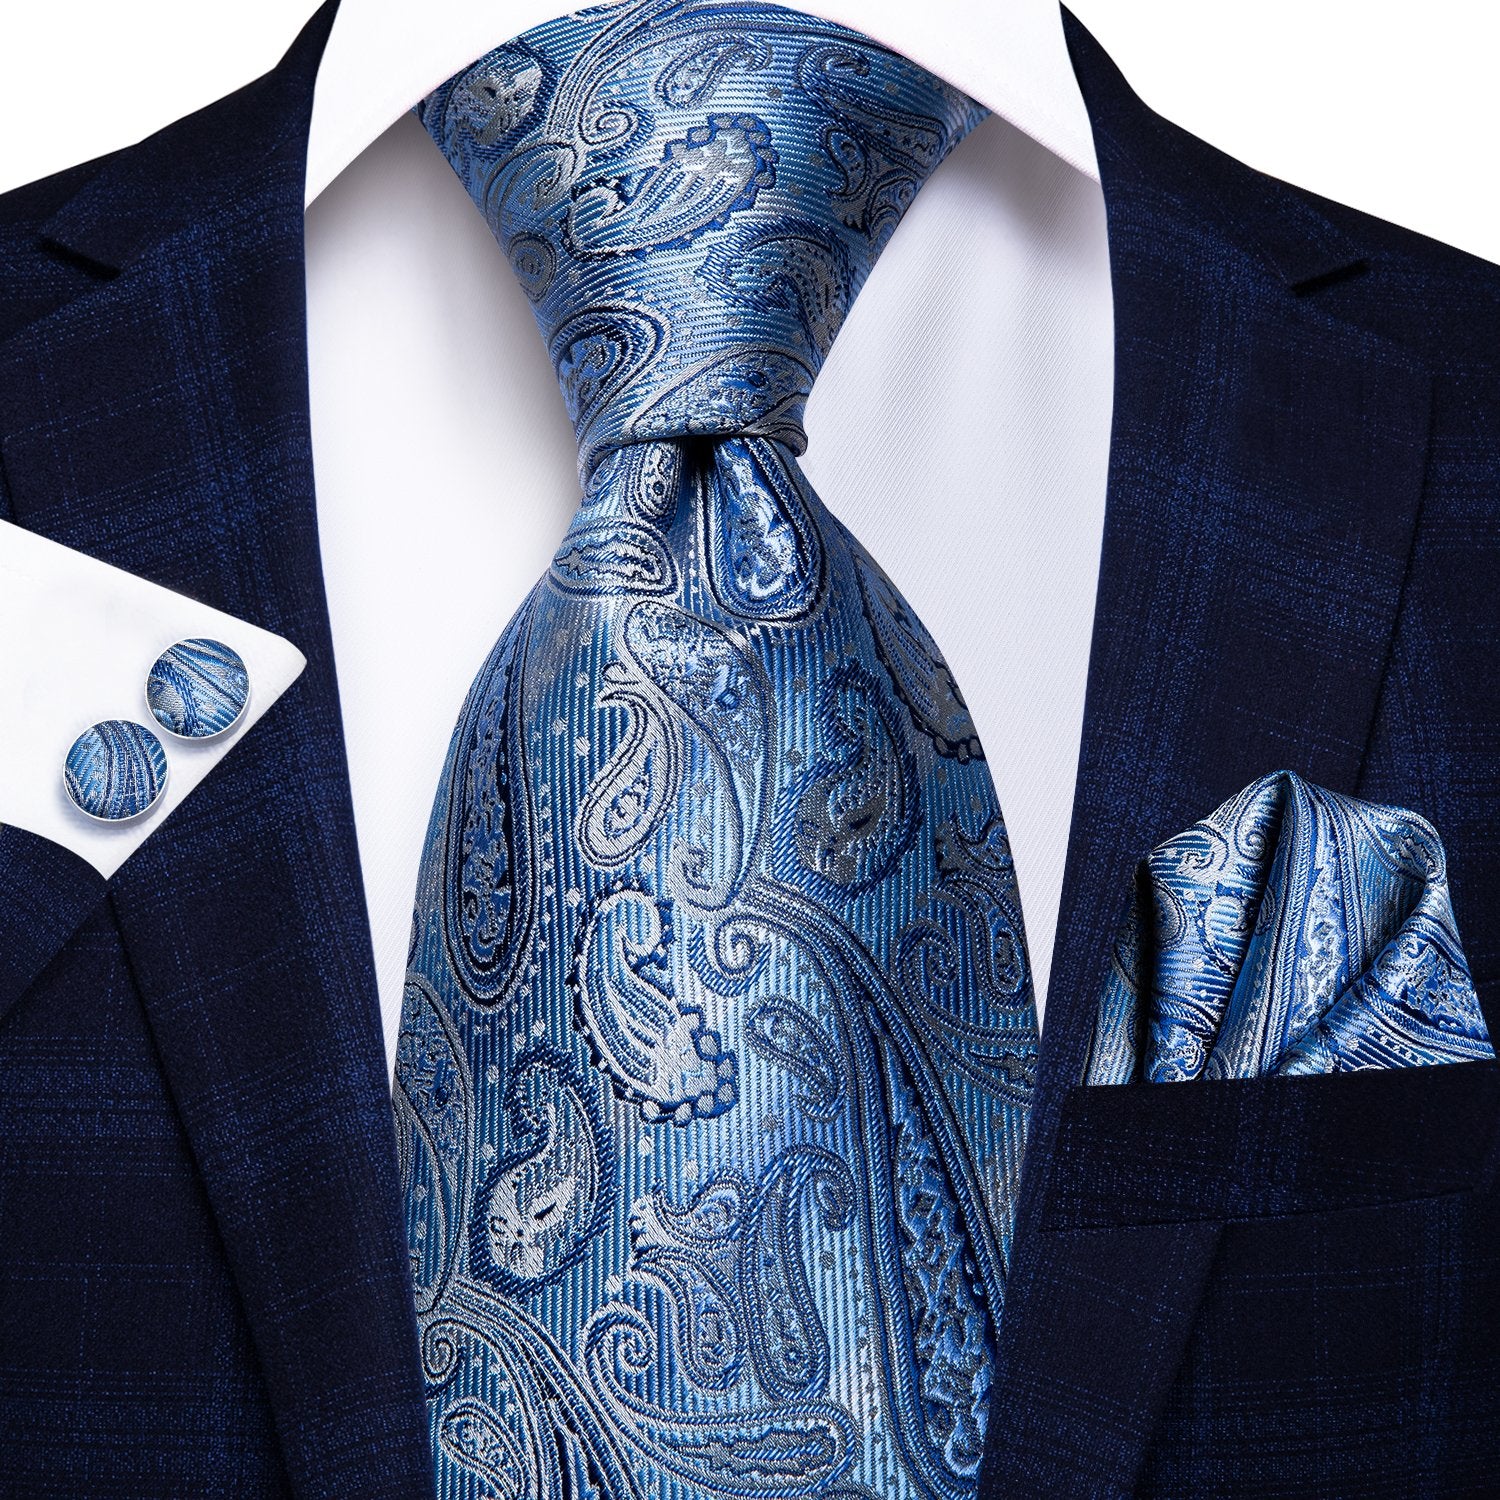 Sky Blue Paisley Tie Handkerchief Cufflinks Set with Wedding Brooch